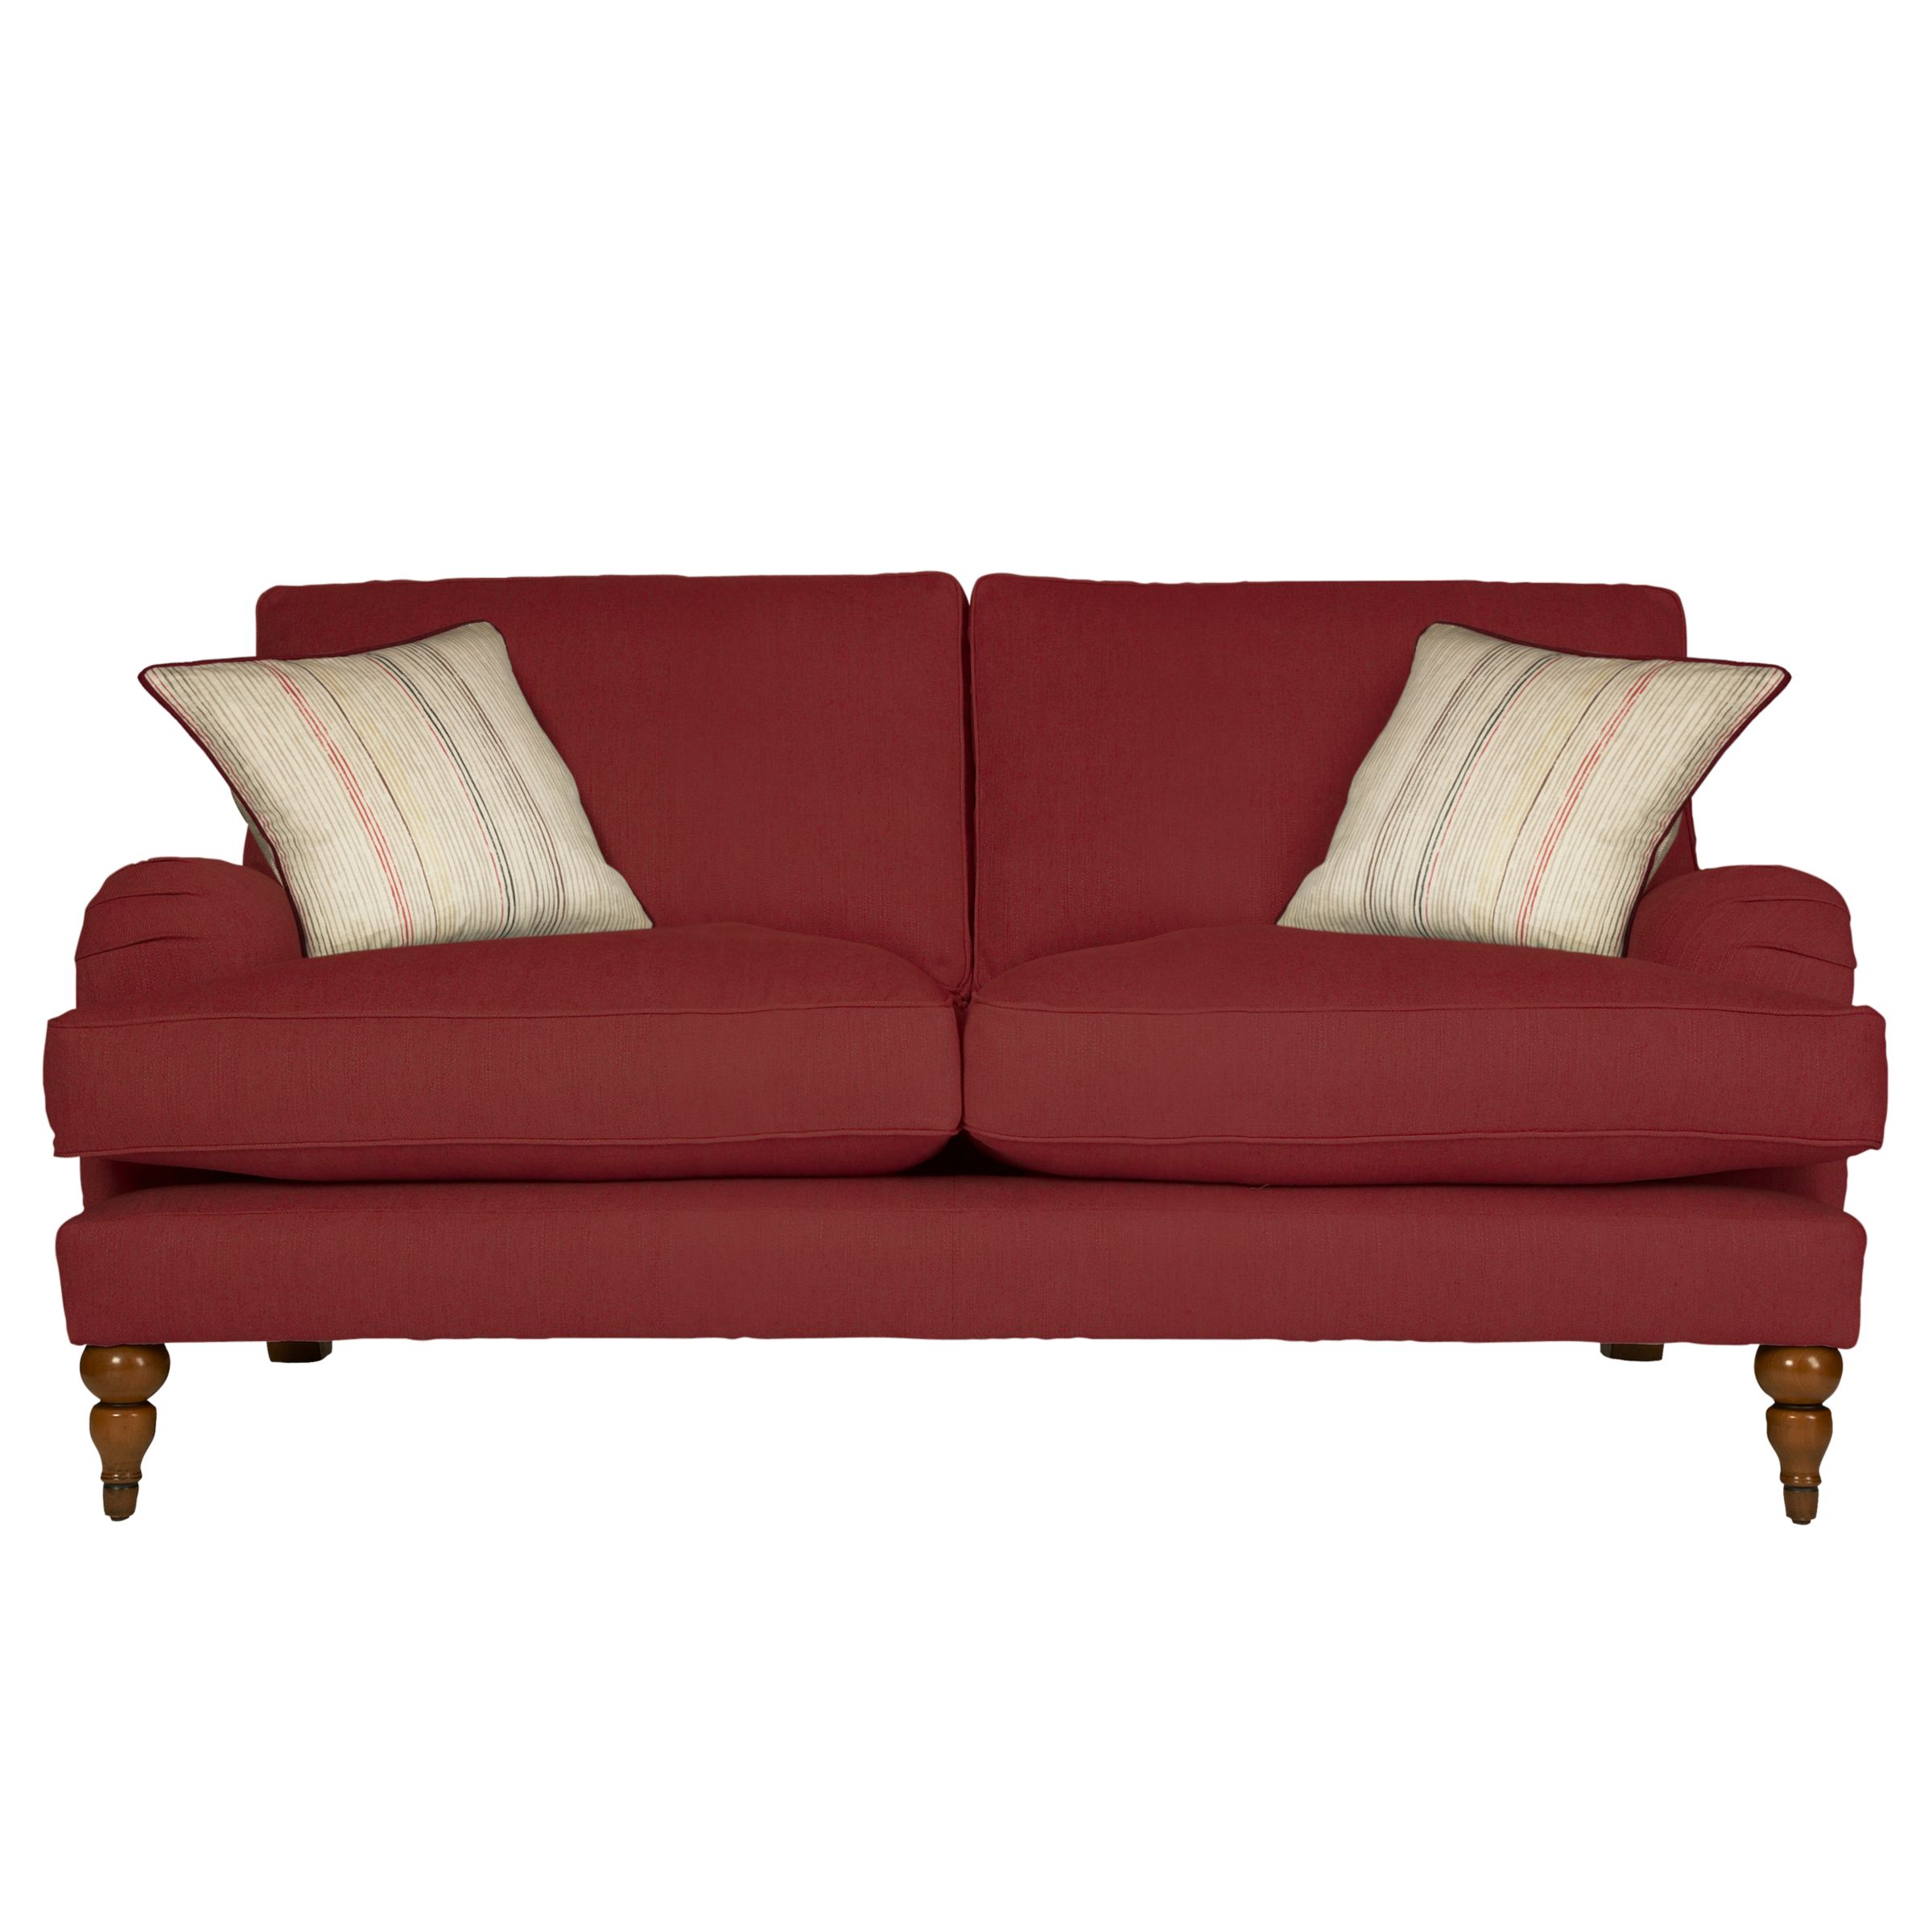 John Lewis Penryn Small Sofa, Bordeaux / Sackville, width 156cm